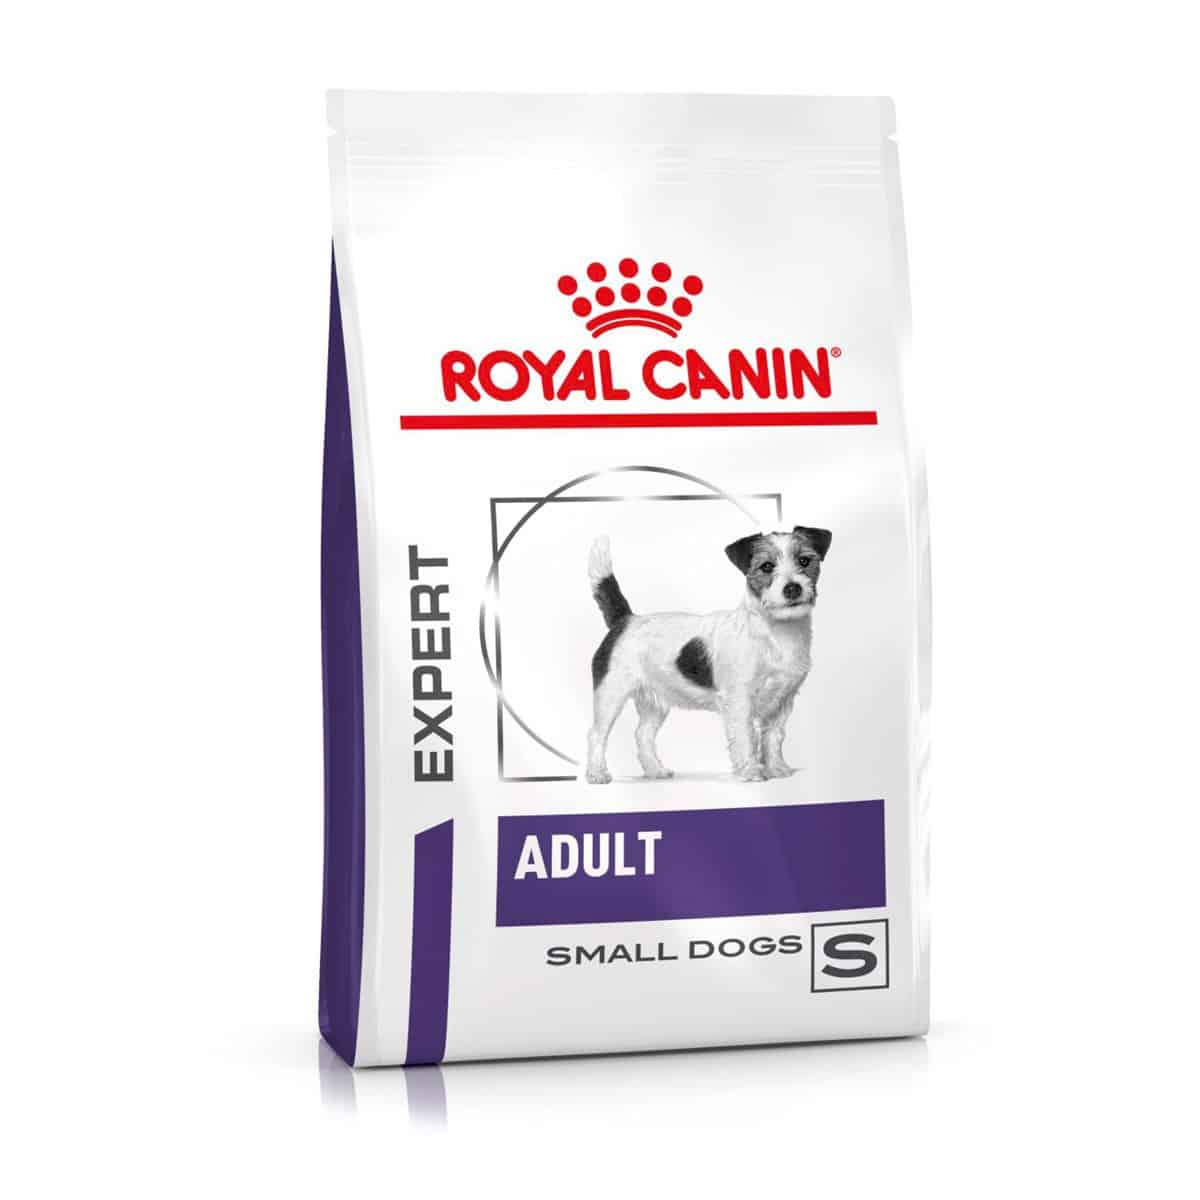 ROYAL CANIN® Expert ADULT SMALL DOGS Trockenfutter für Hunde 2kg